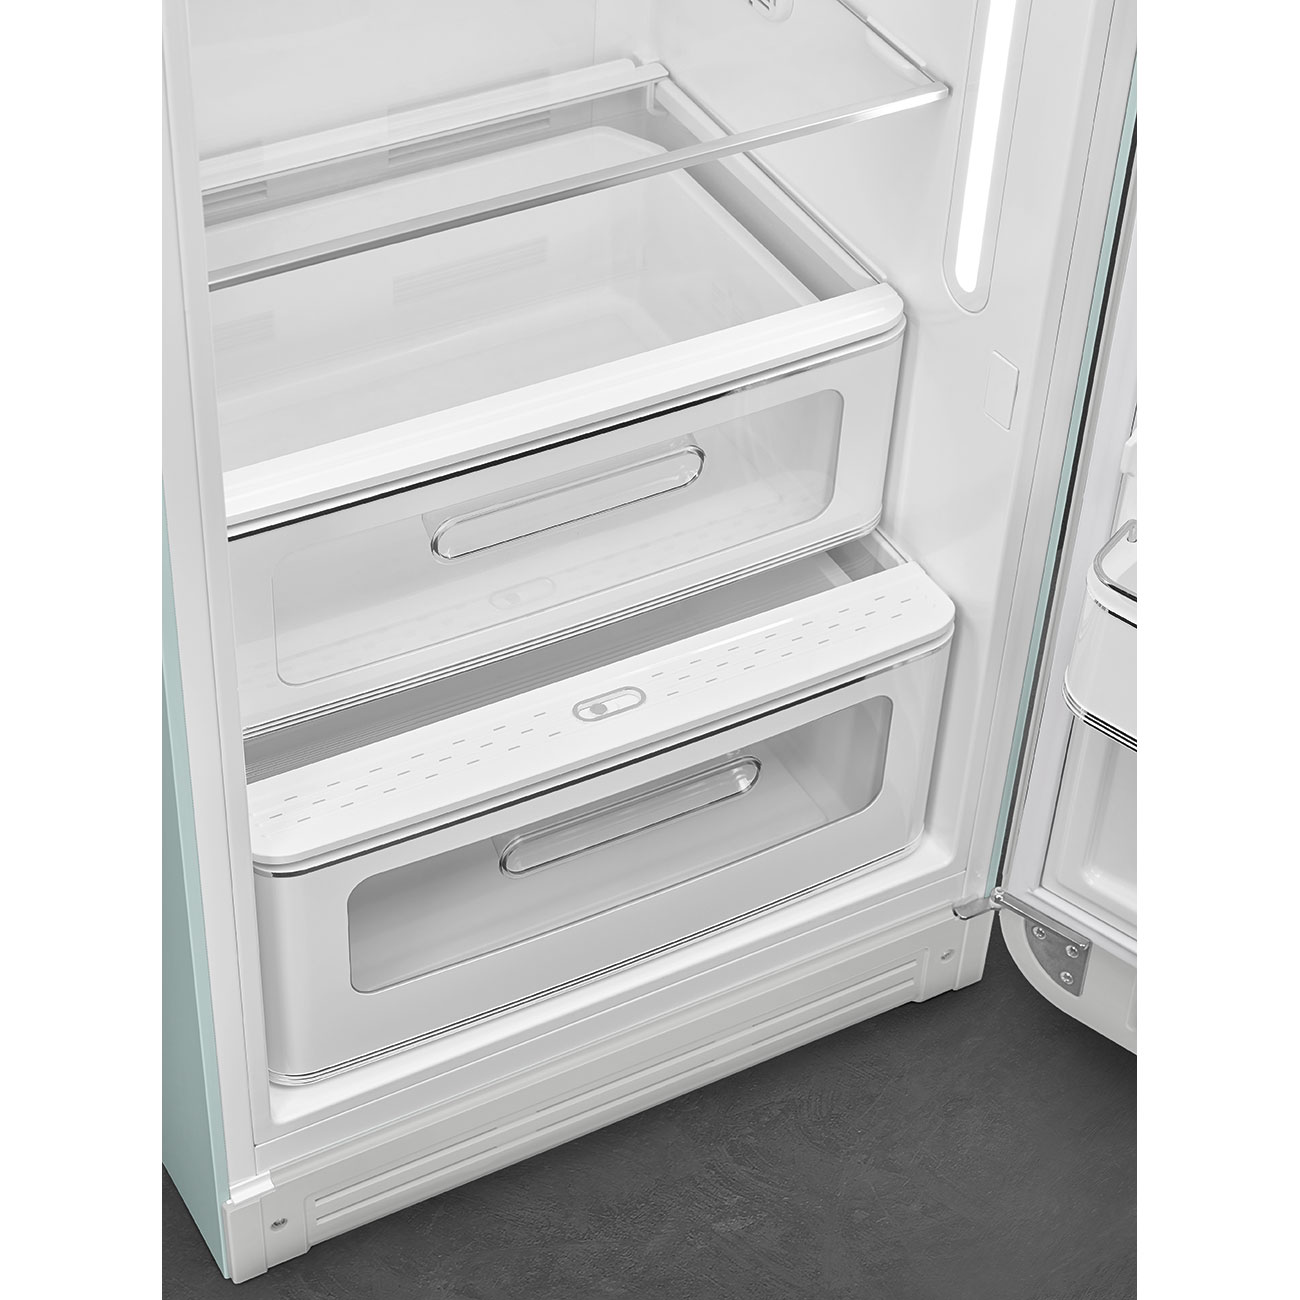 Sea Salt Green refrigerator - Smeg_7